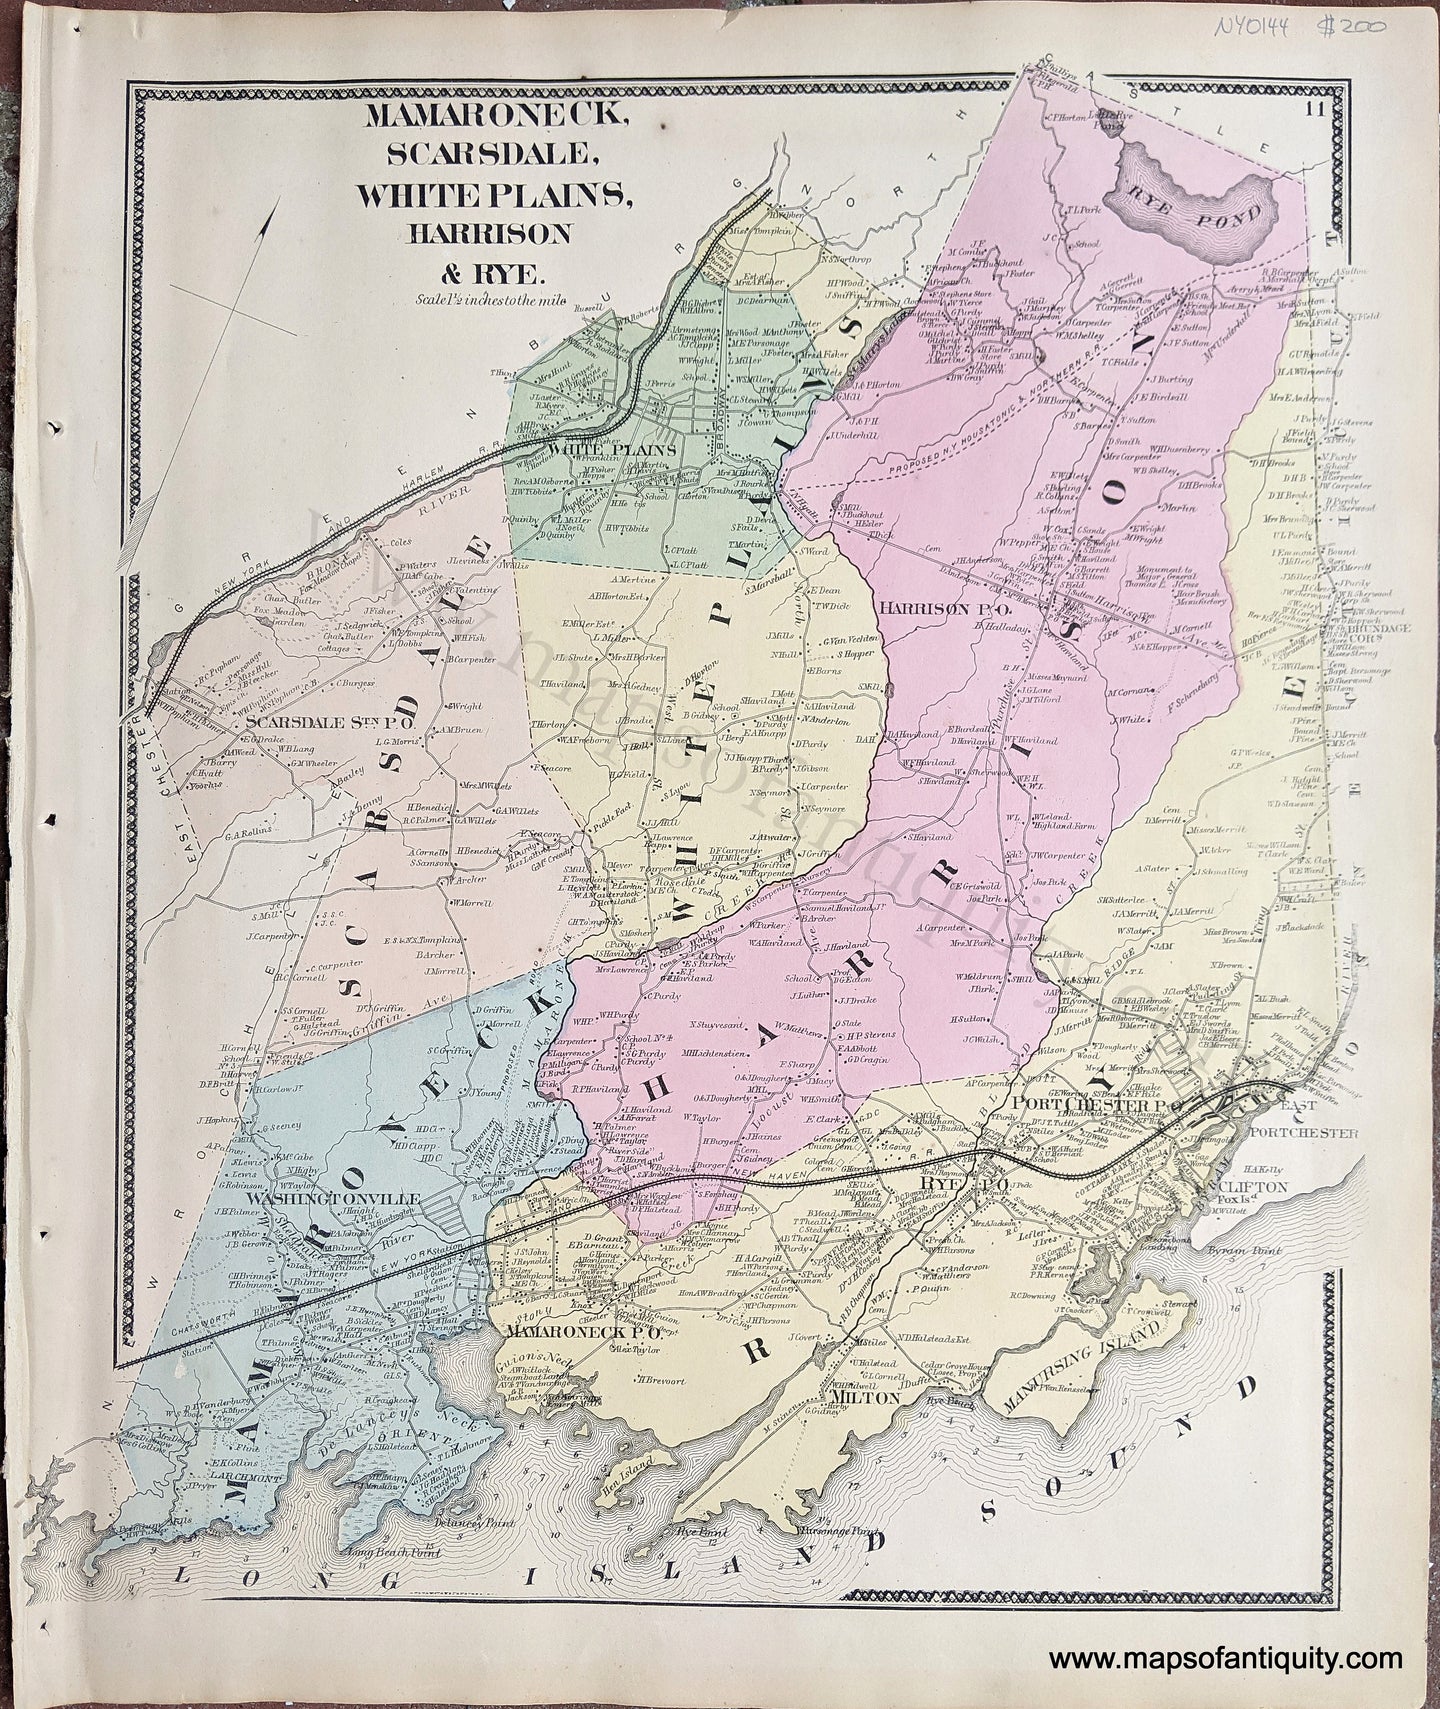 1867 - Mamaroneck, Scarsdale, White Plains, Harrison & Rye. (NY) - Antique Map